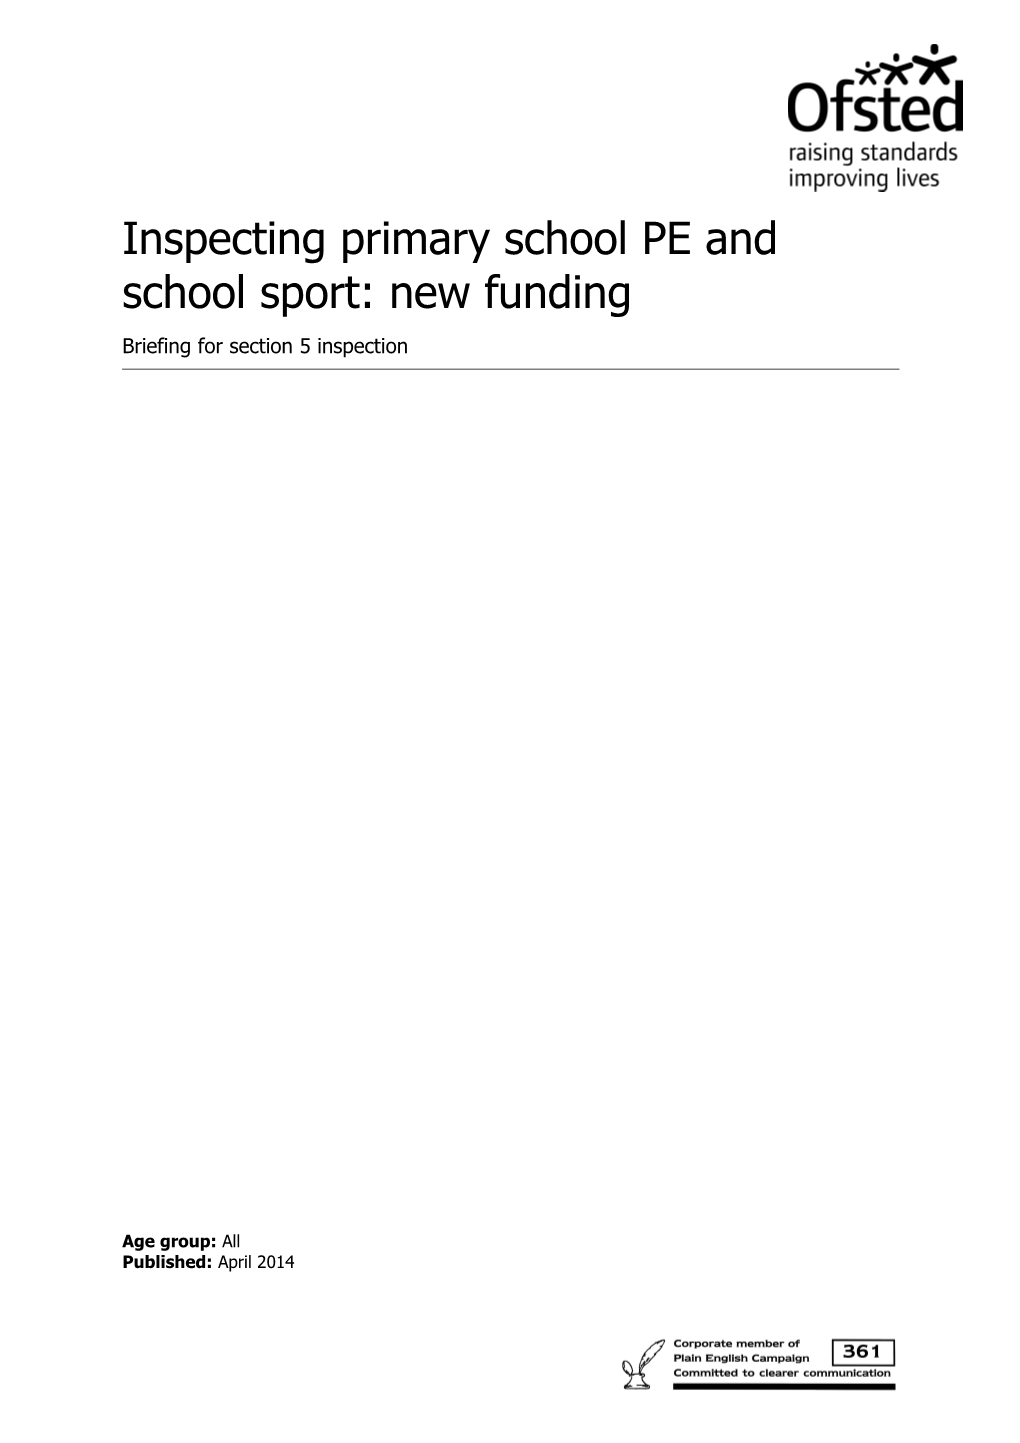 Inspecting Primary School PE and School Sport: New Funding